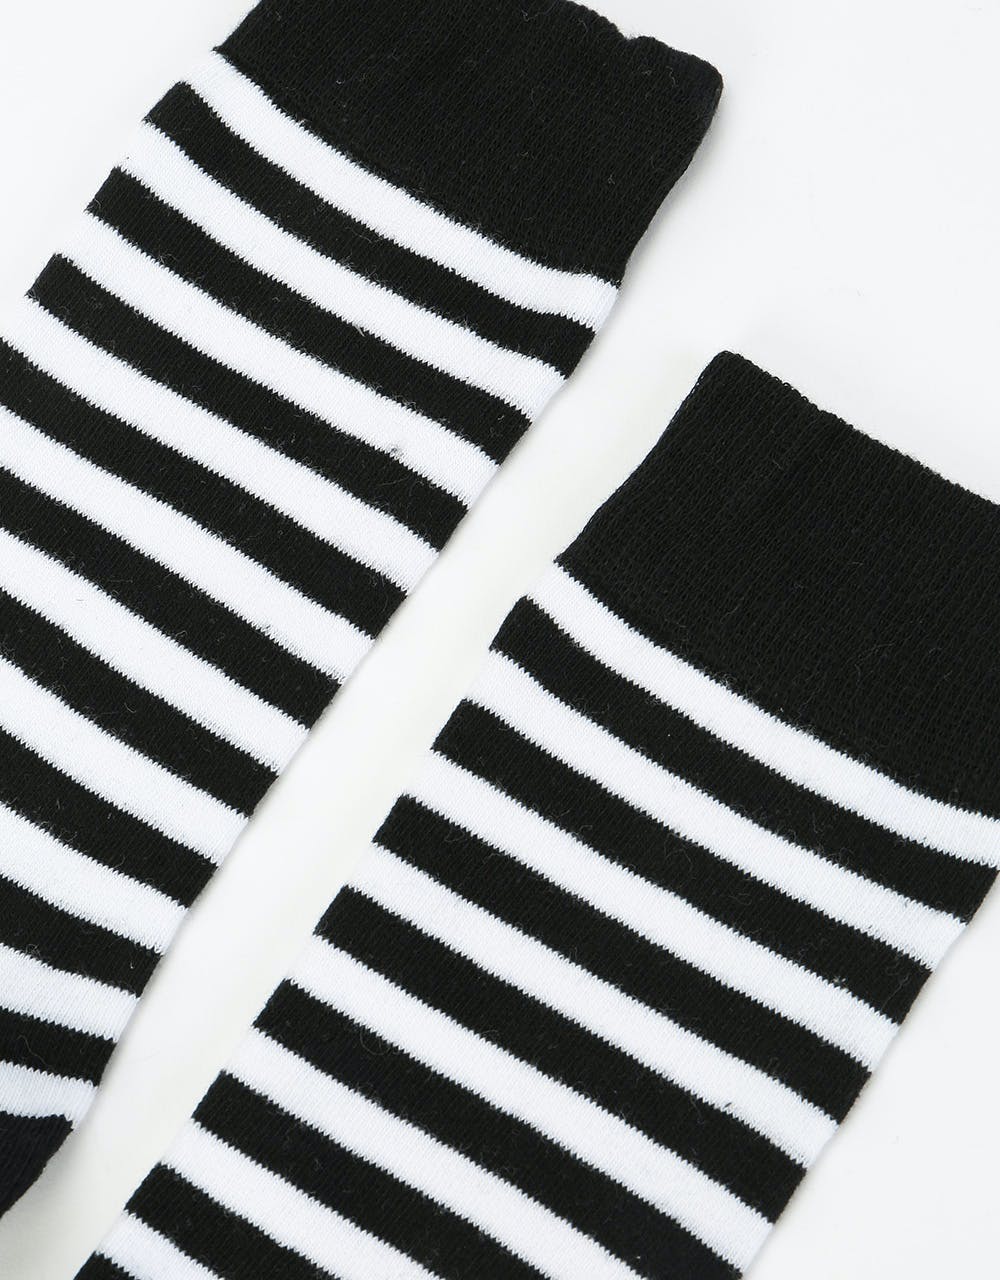 Route One Striped Socks - Black/White